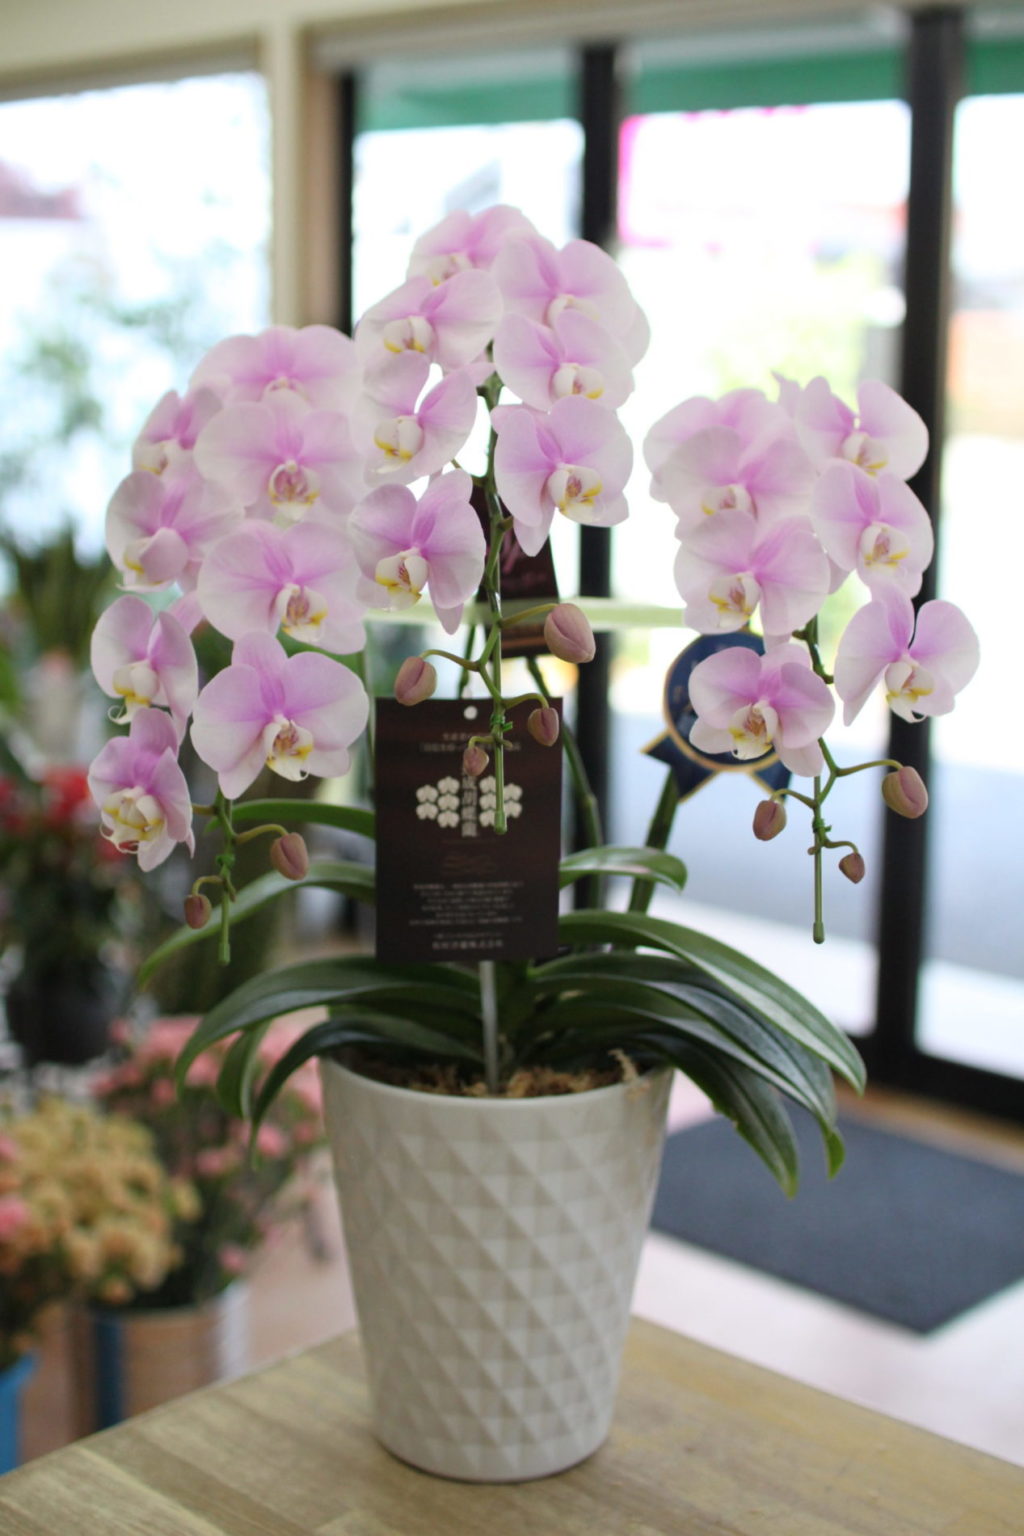 Midi Phalaenopsis Orchid 3-stem: 13,500 yen tax included